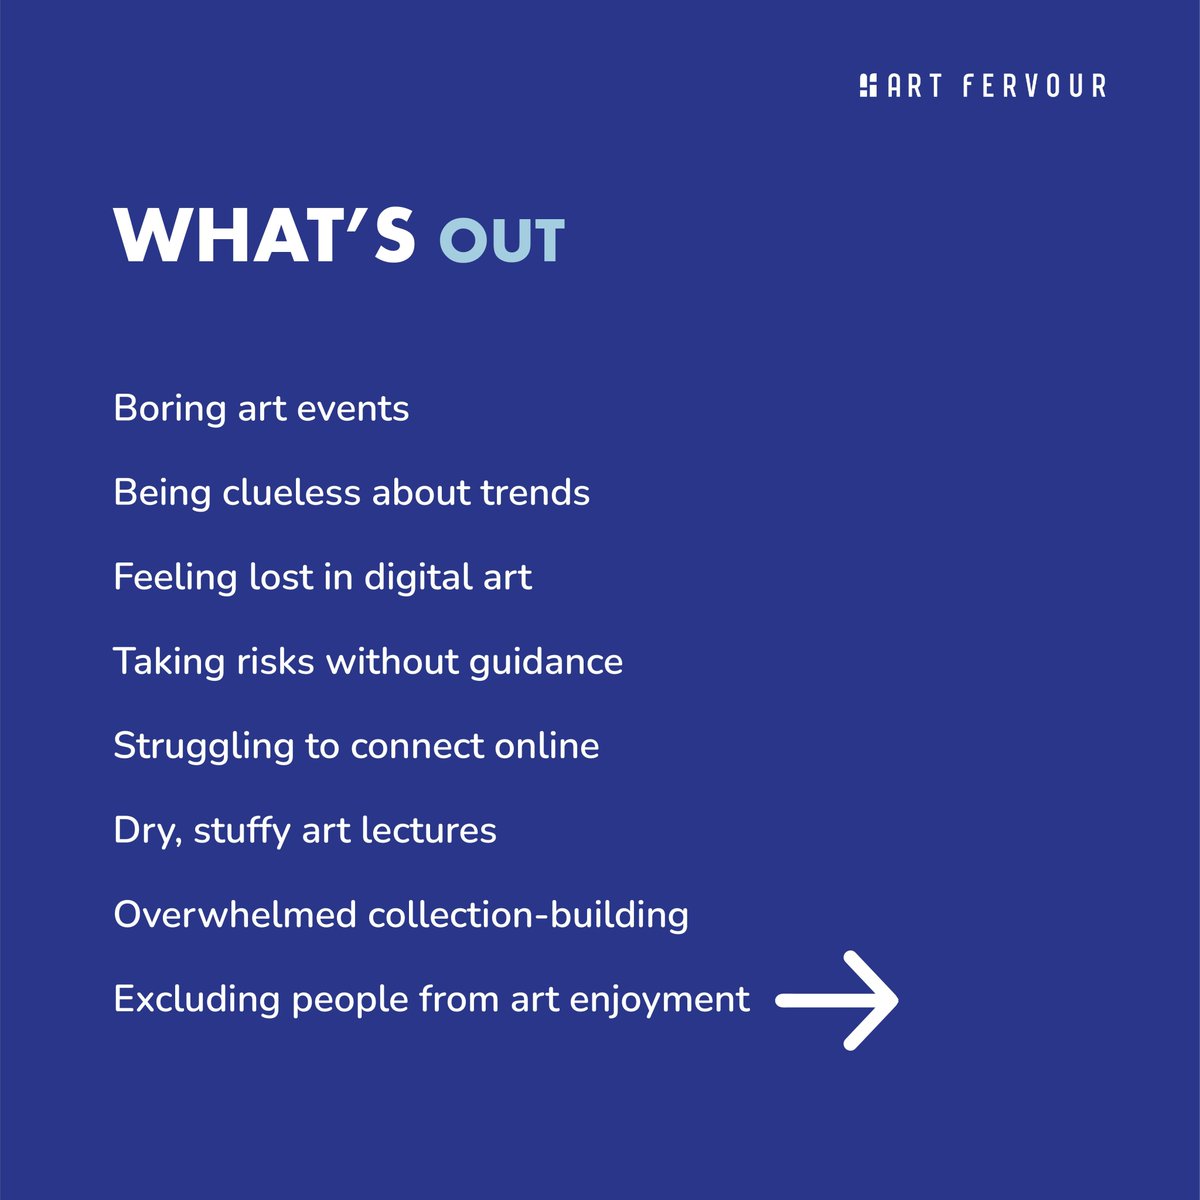 Unlock the World of Art: Discover, Learn, and Build with Art Fervour's Services!  Head to artfervour.com

#ArtFervour #ArtEditorial #DigitalArtGuide #ConsultancyServices #DigitalOutreach #MakeArtAccessible #ArtLovers #ArtInvestors #ArtEnthusiasts #ArtCommunity